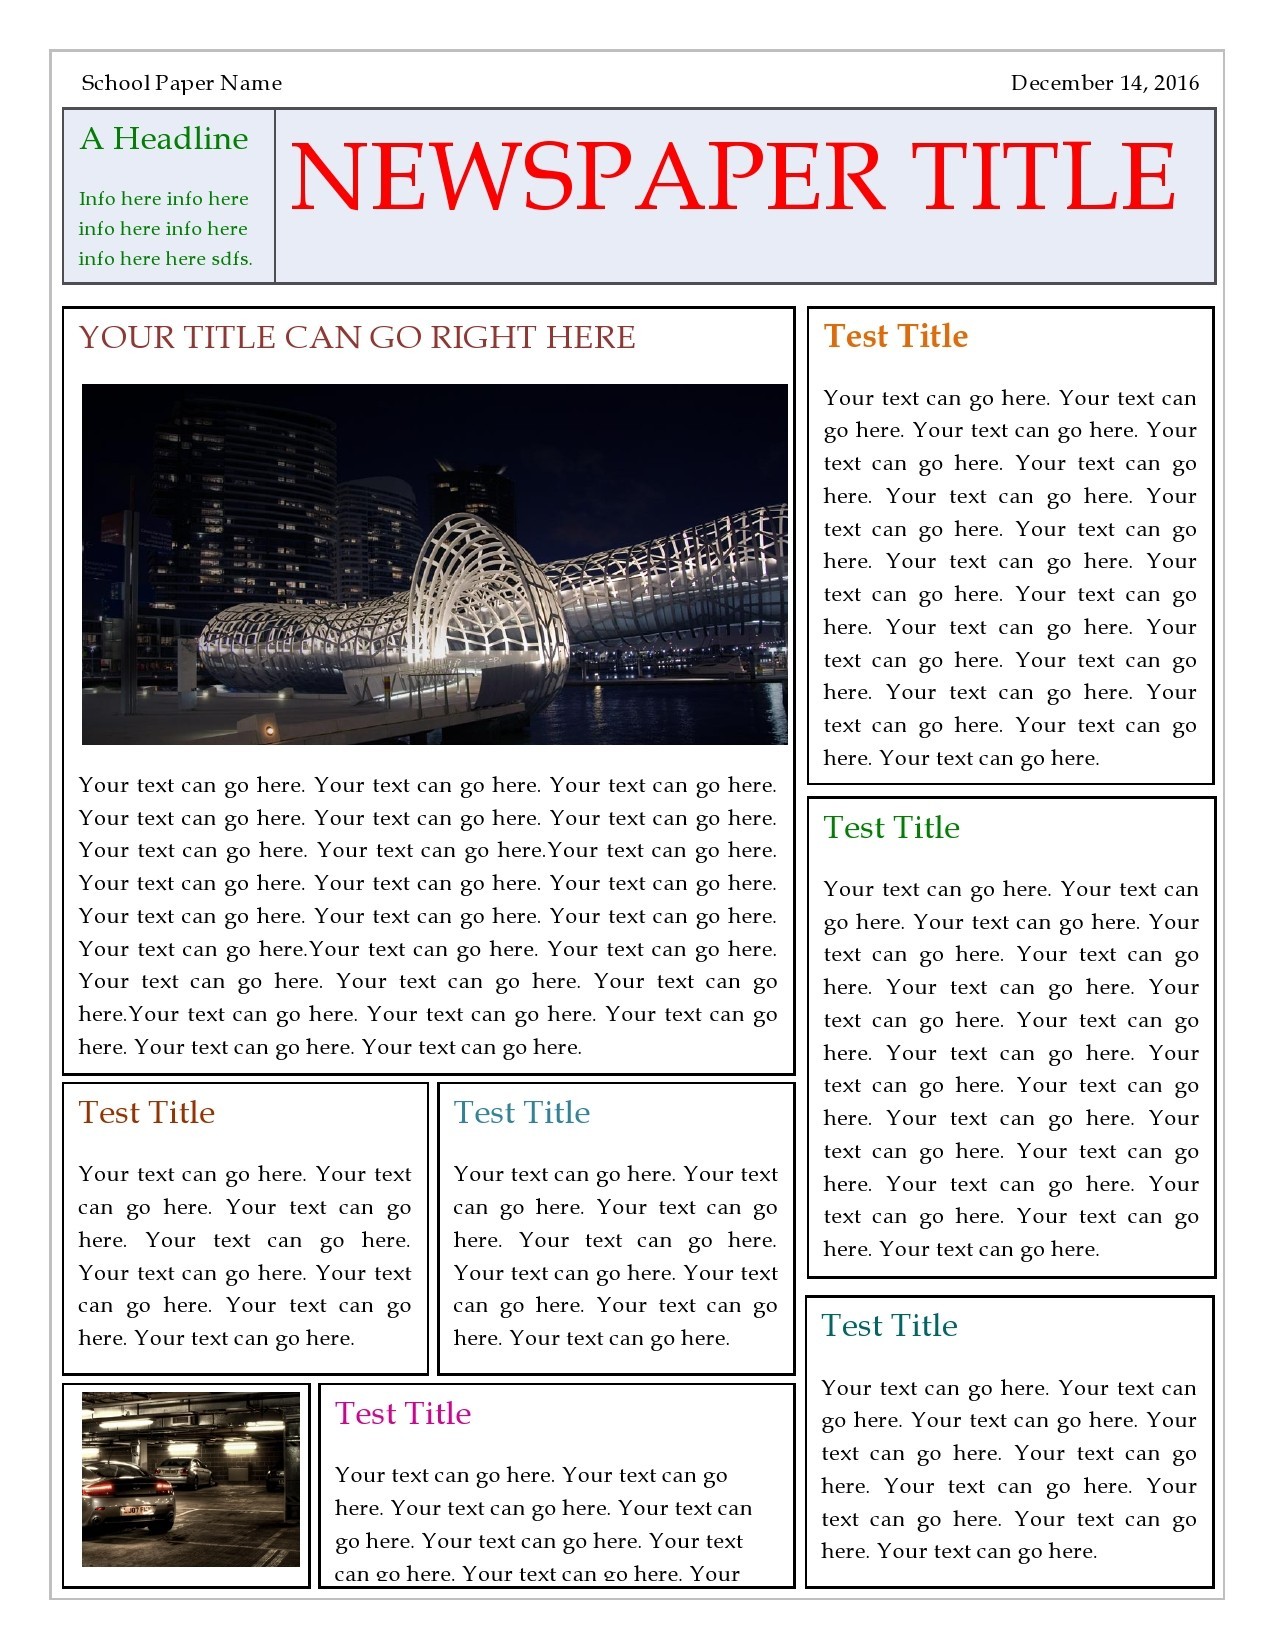 Free newspaper template 30